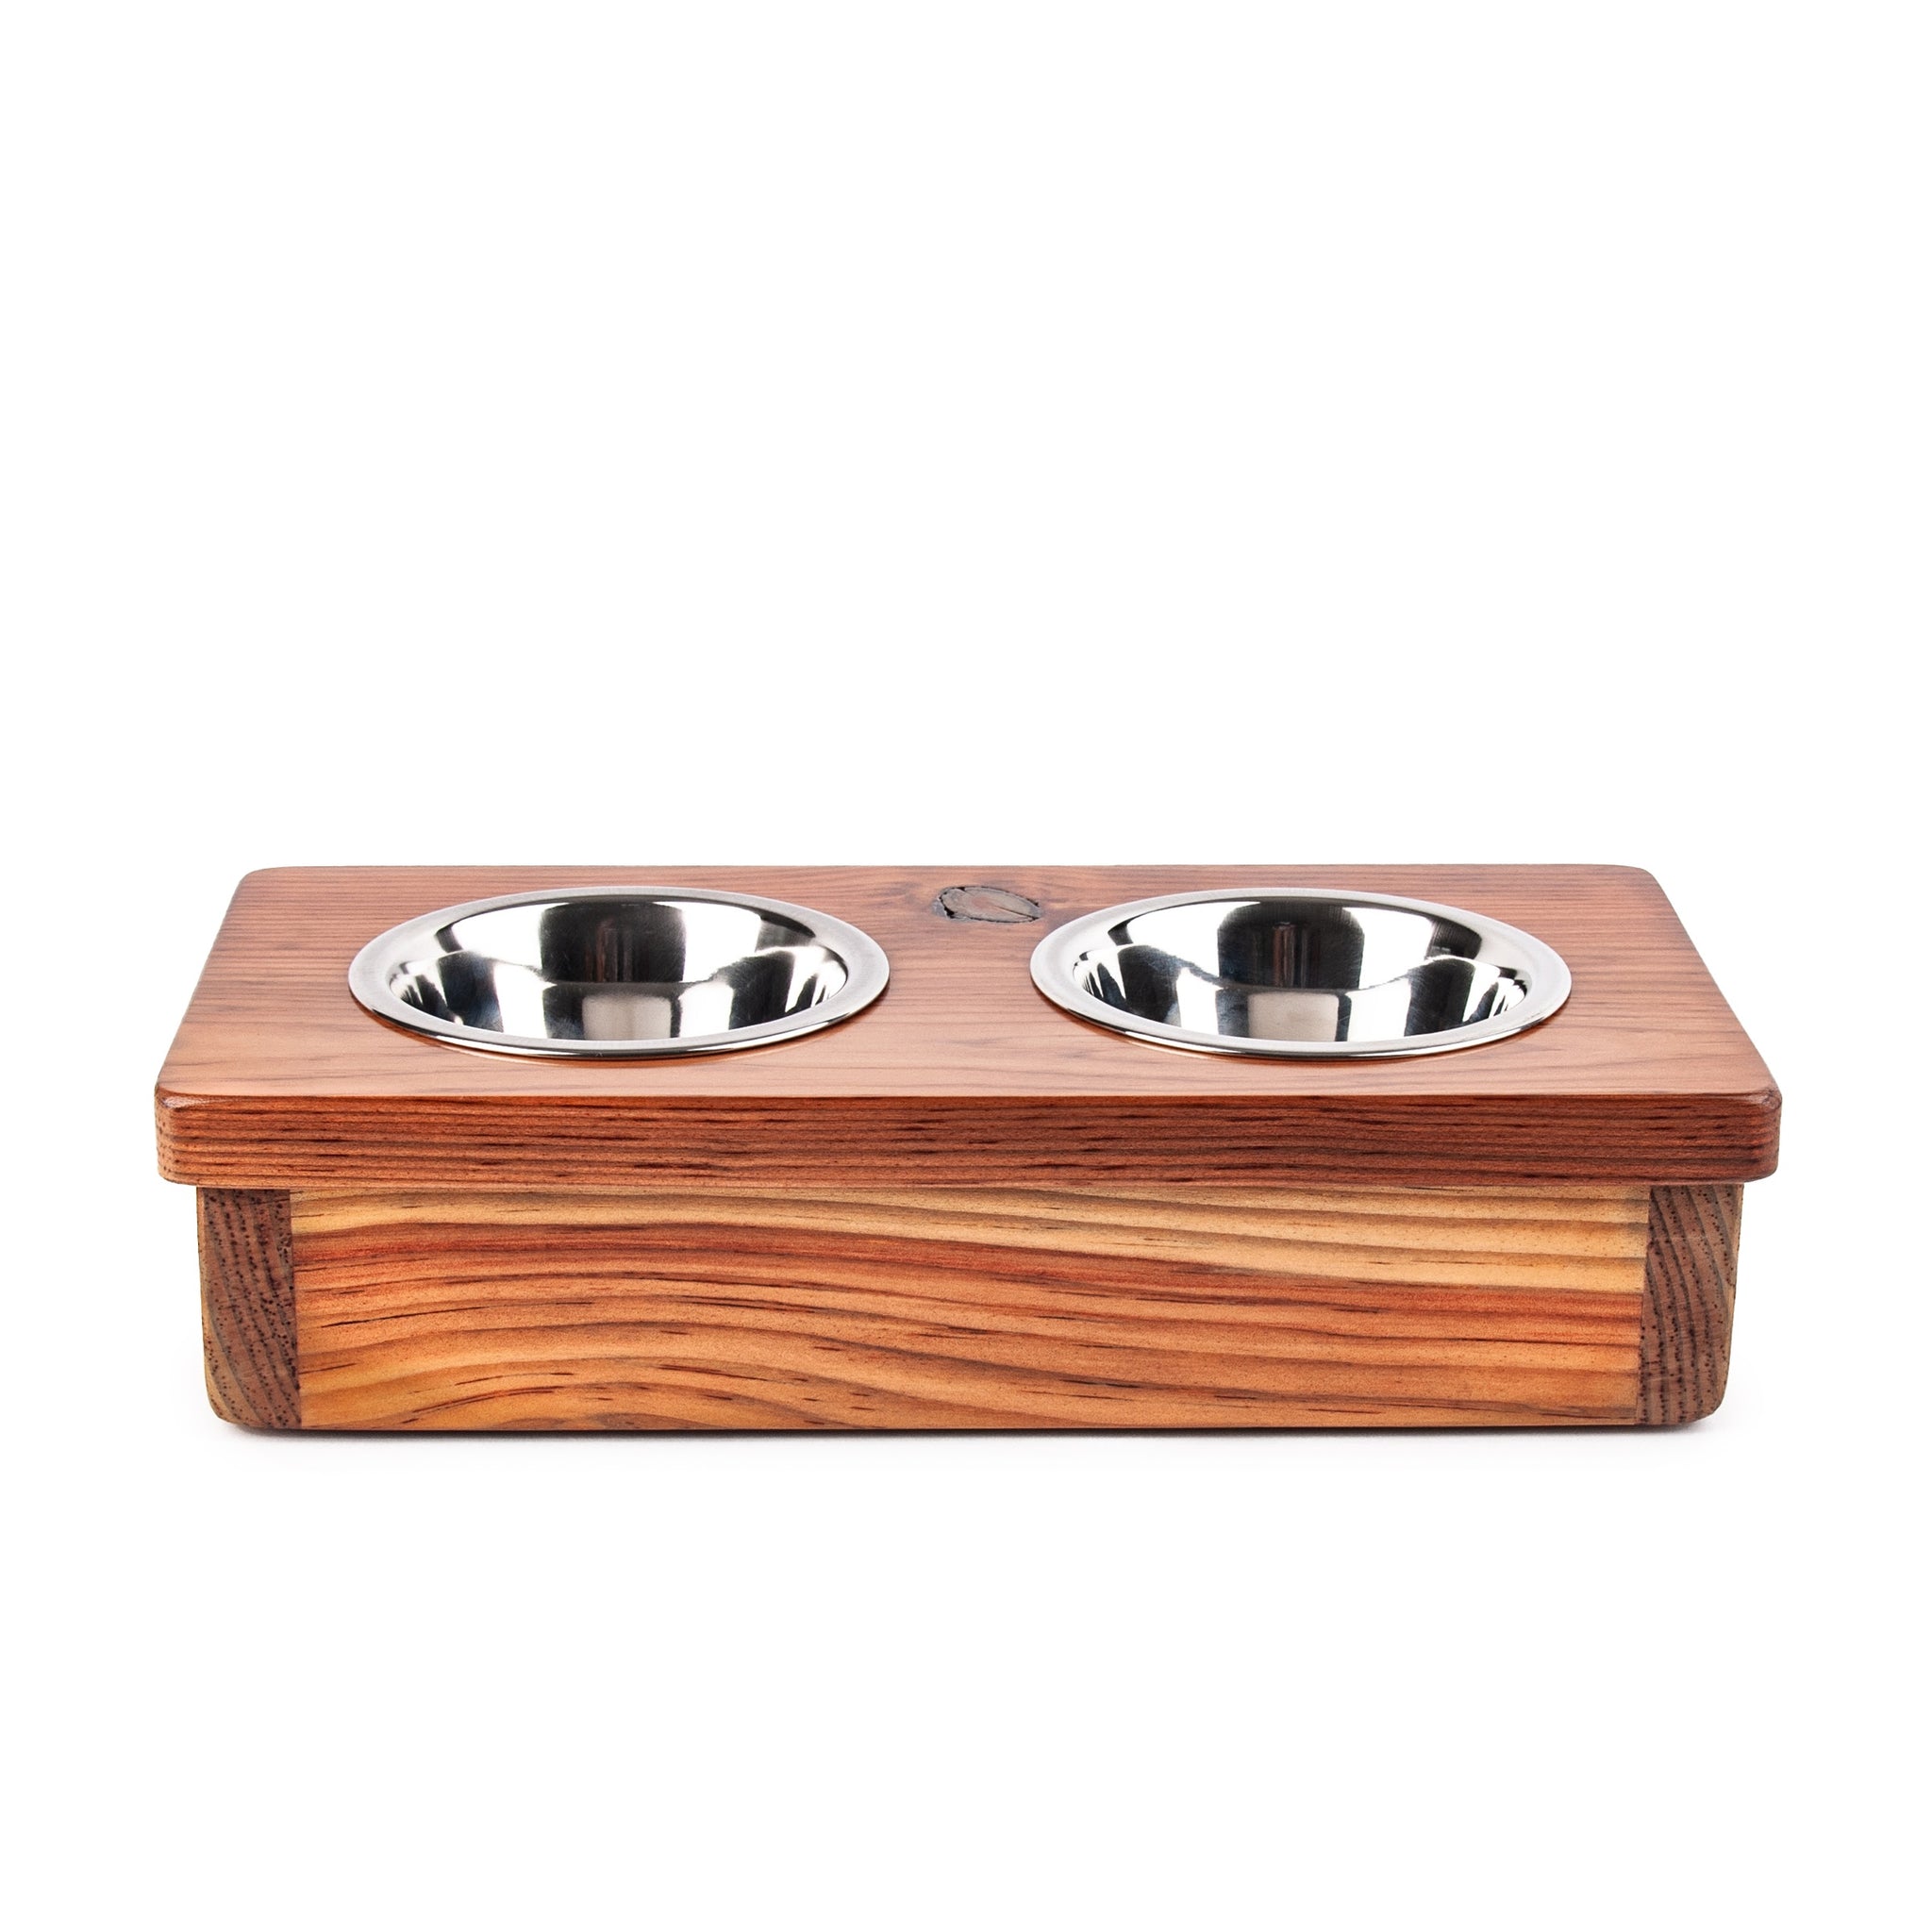 Tiny Dog Bowls, Small Dog, Teacup dog, feeding station – Ozarks